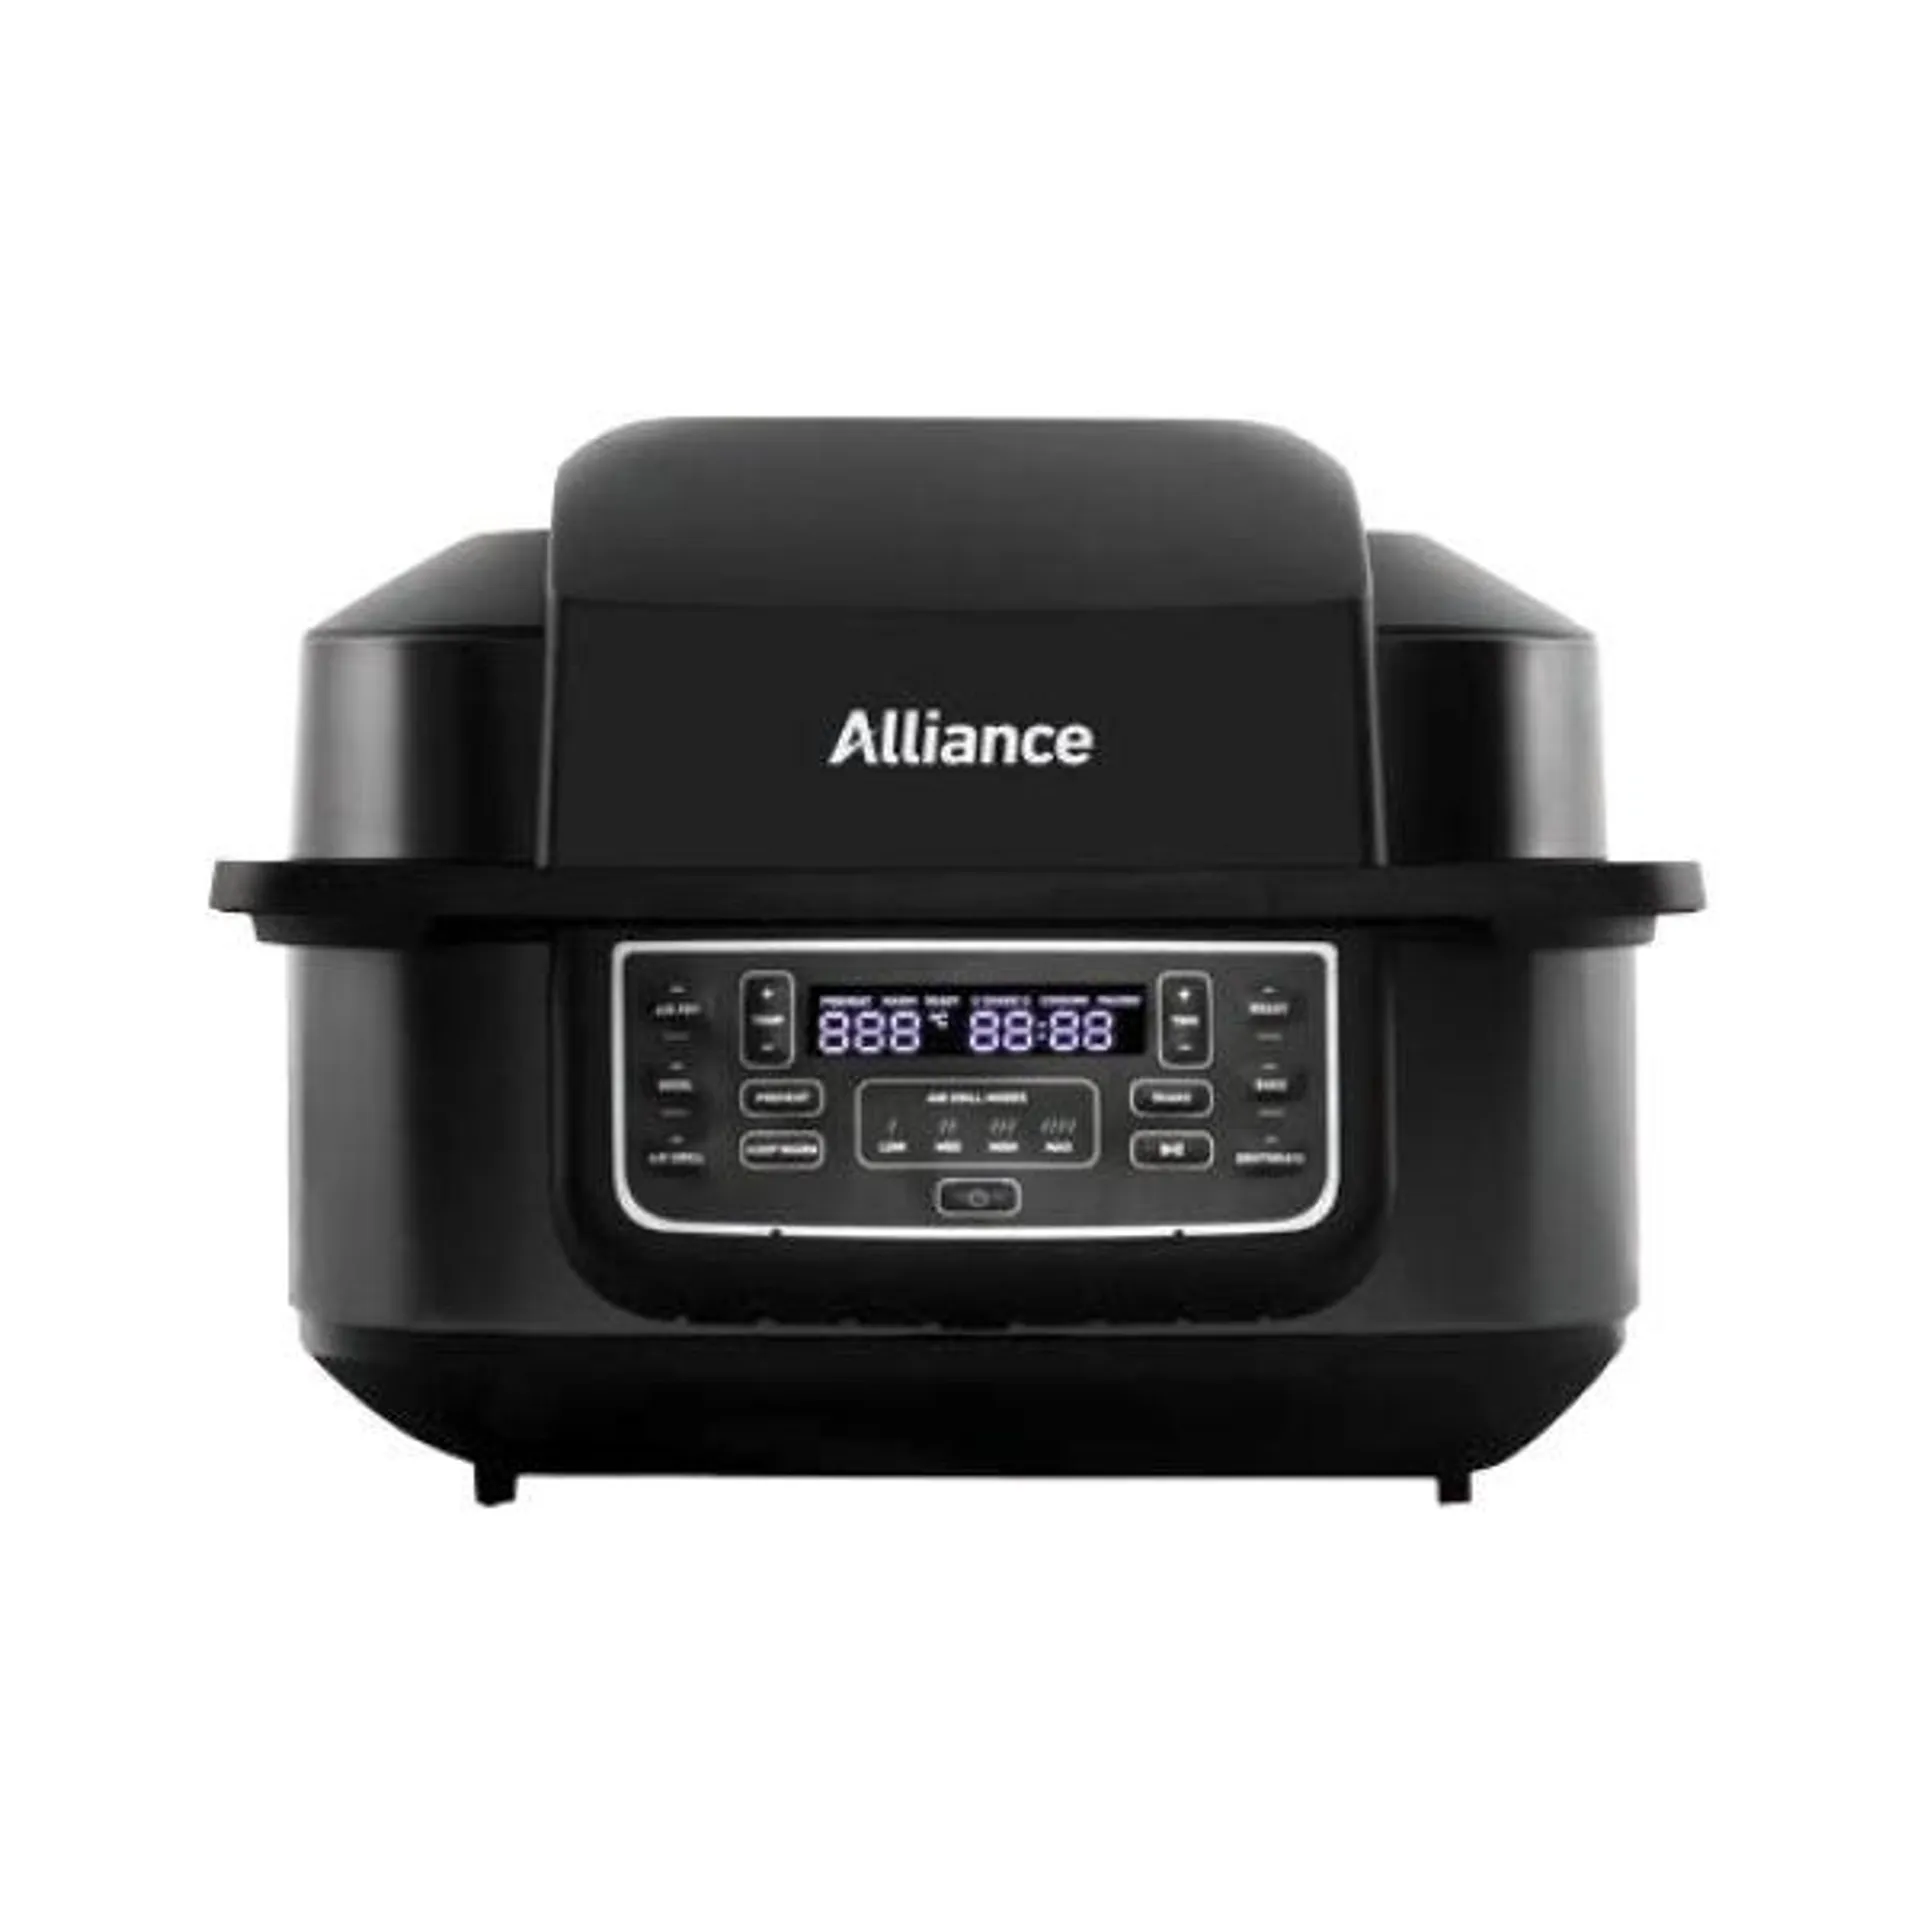 Alliance 6L Digital Indoor Grill & Air Fryer